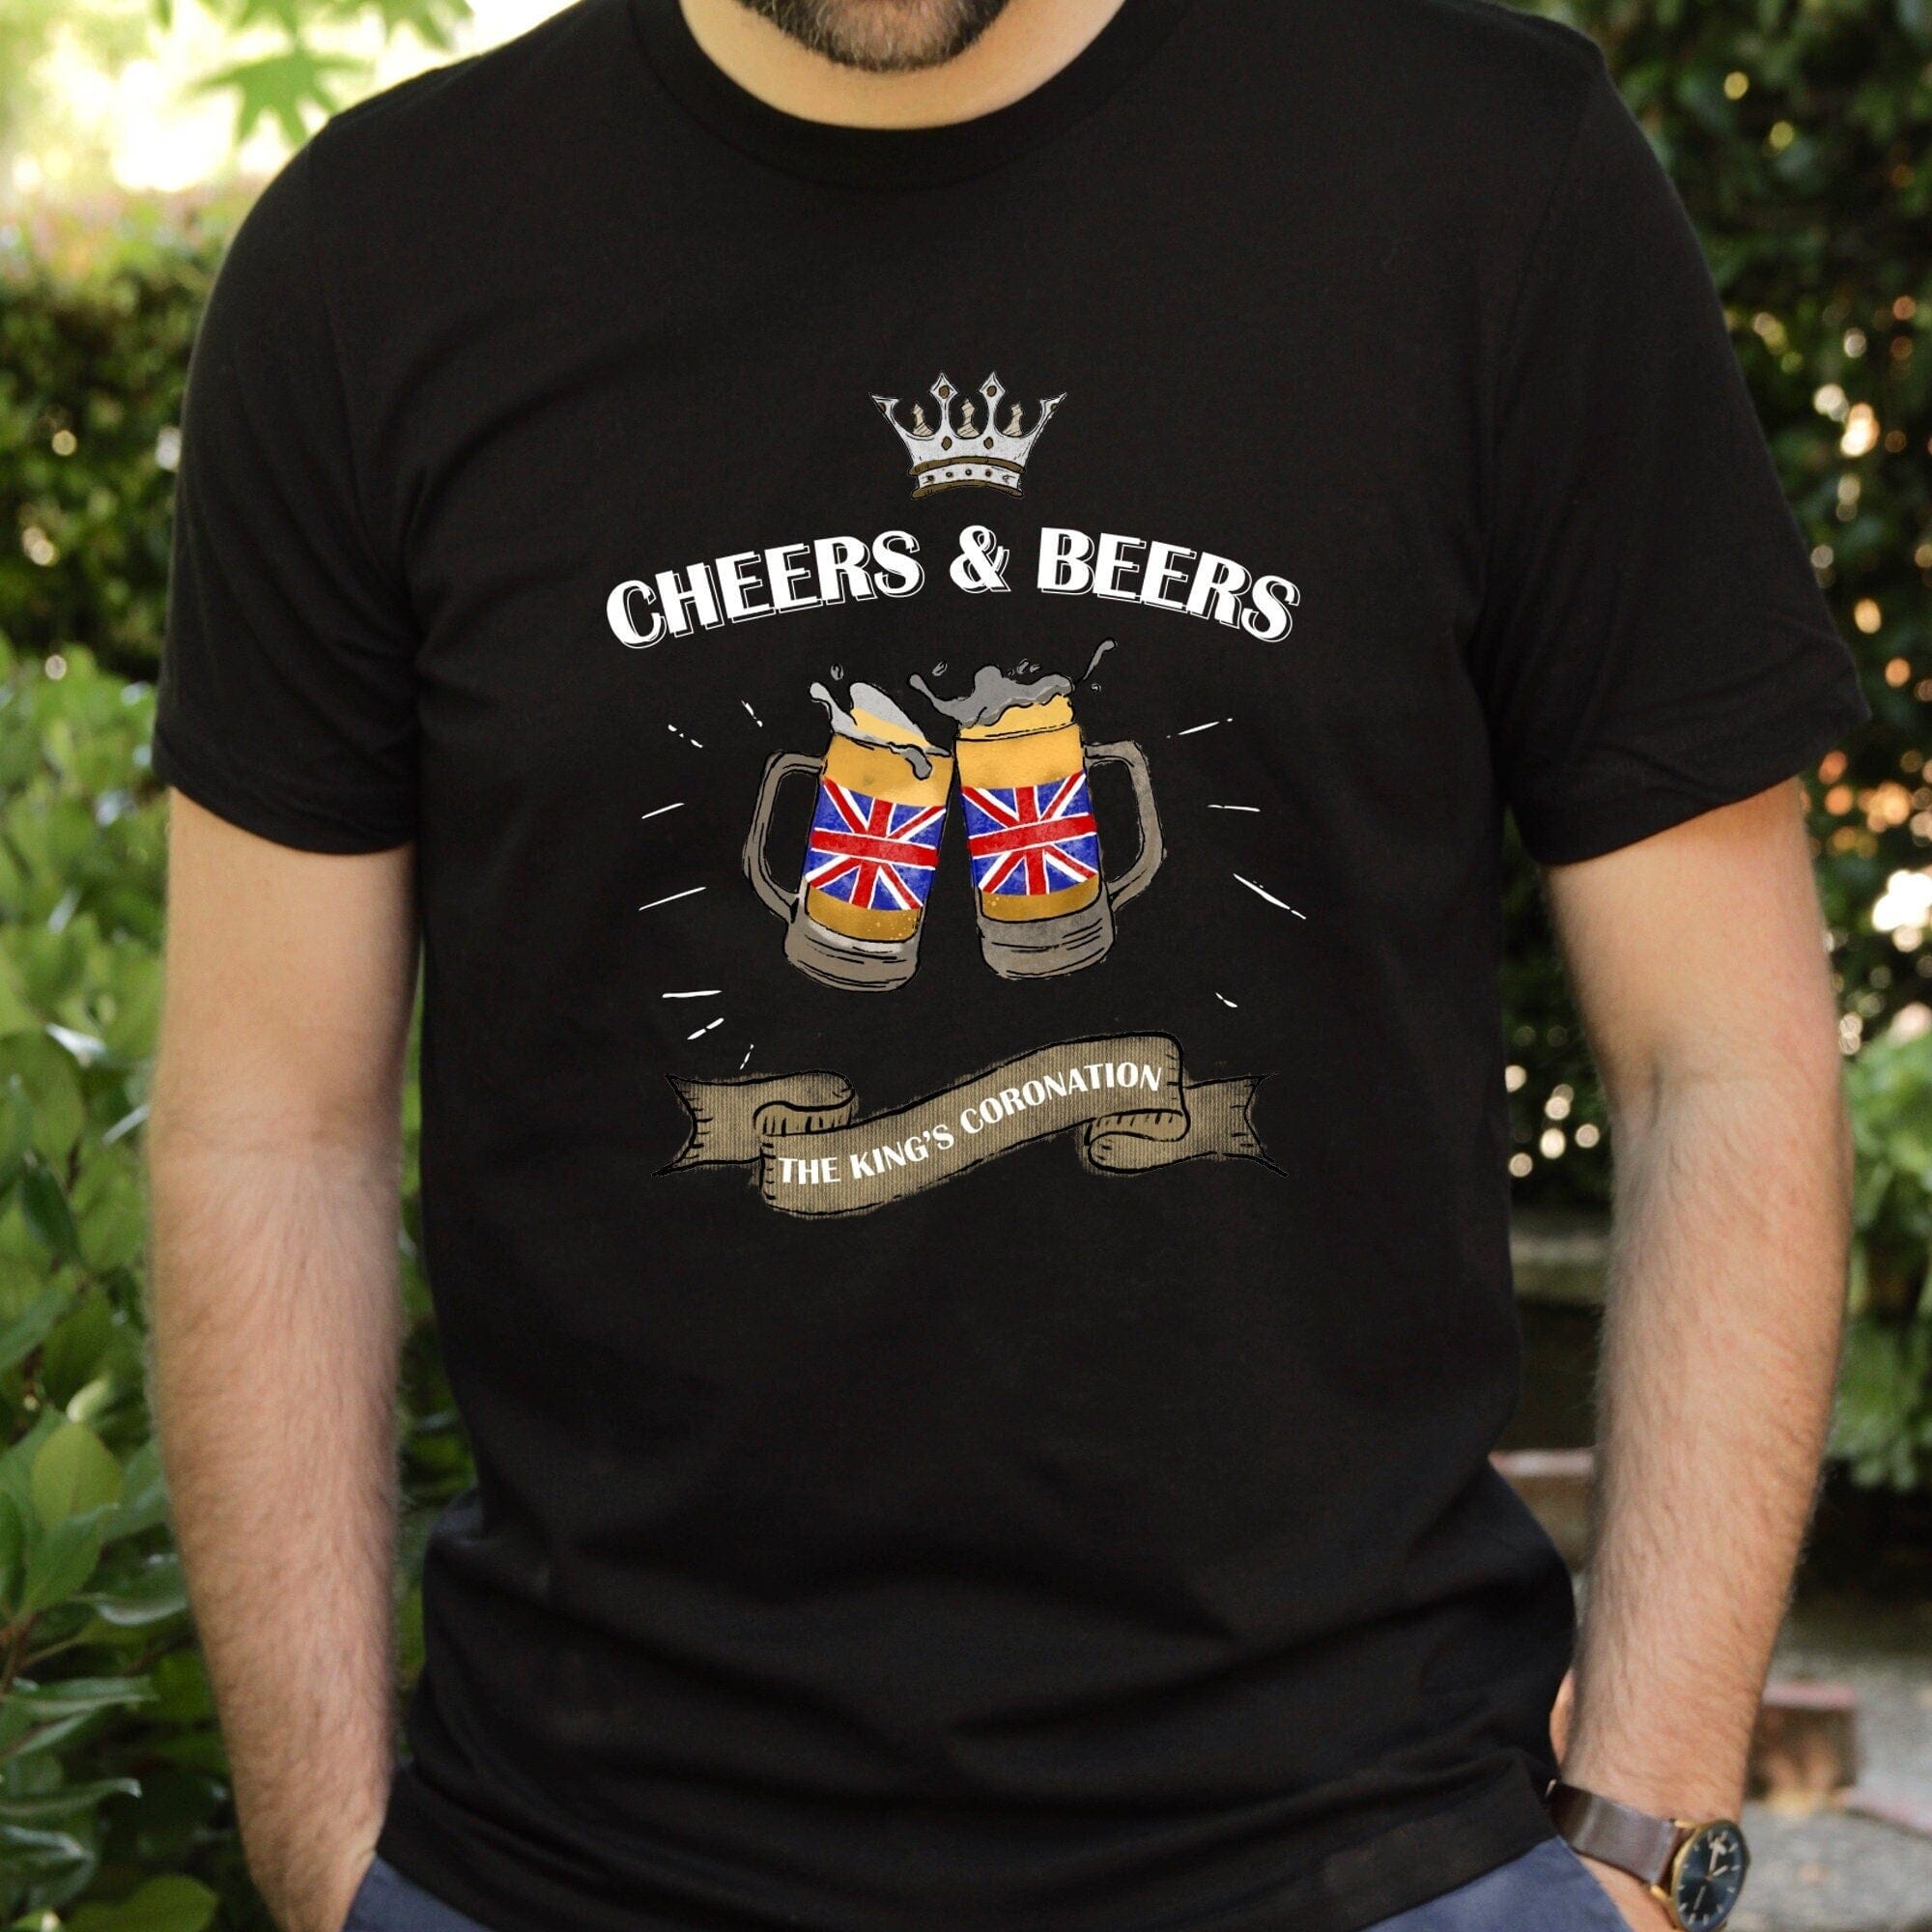 Cheers & Beers To King'S Coronation T-Shirt, Unisex For Men Women, King Charles Iii Coronation Celebrations Tee